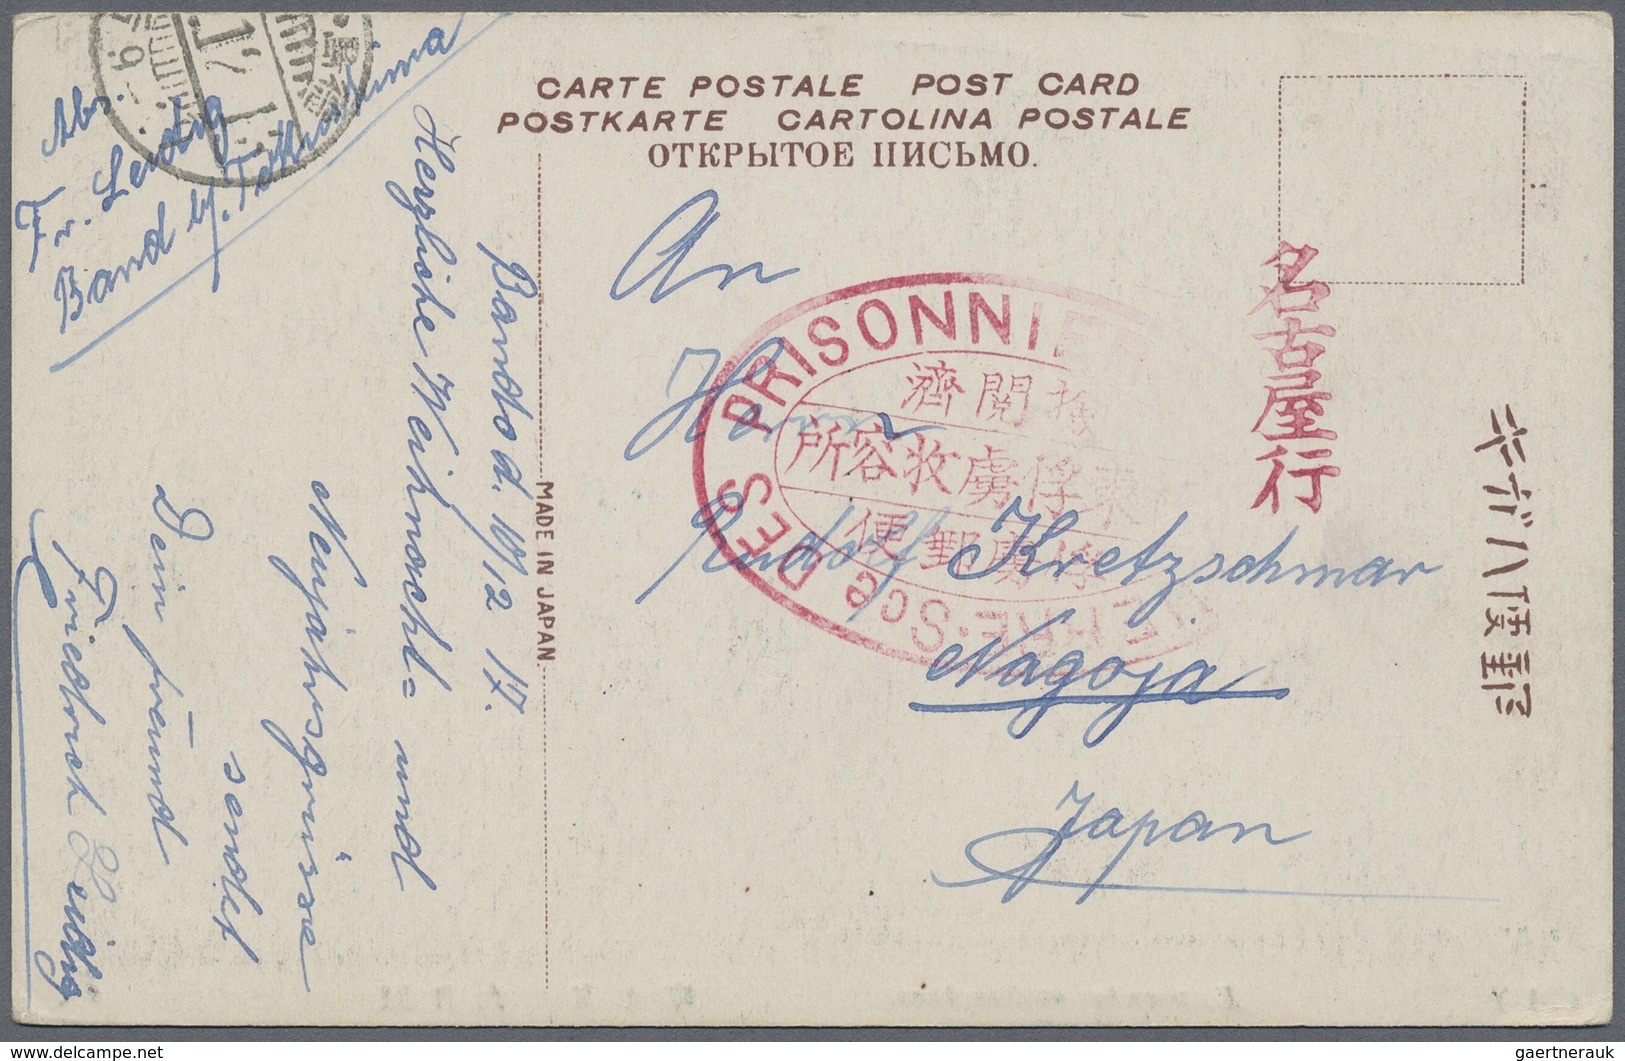 Br/ Lagerpost Tsingtau: Nagoya, 1915/18, ppc (20) used: inbound intercamp cards from Matsuyama (2), Band